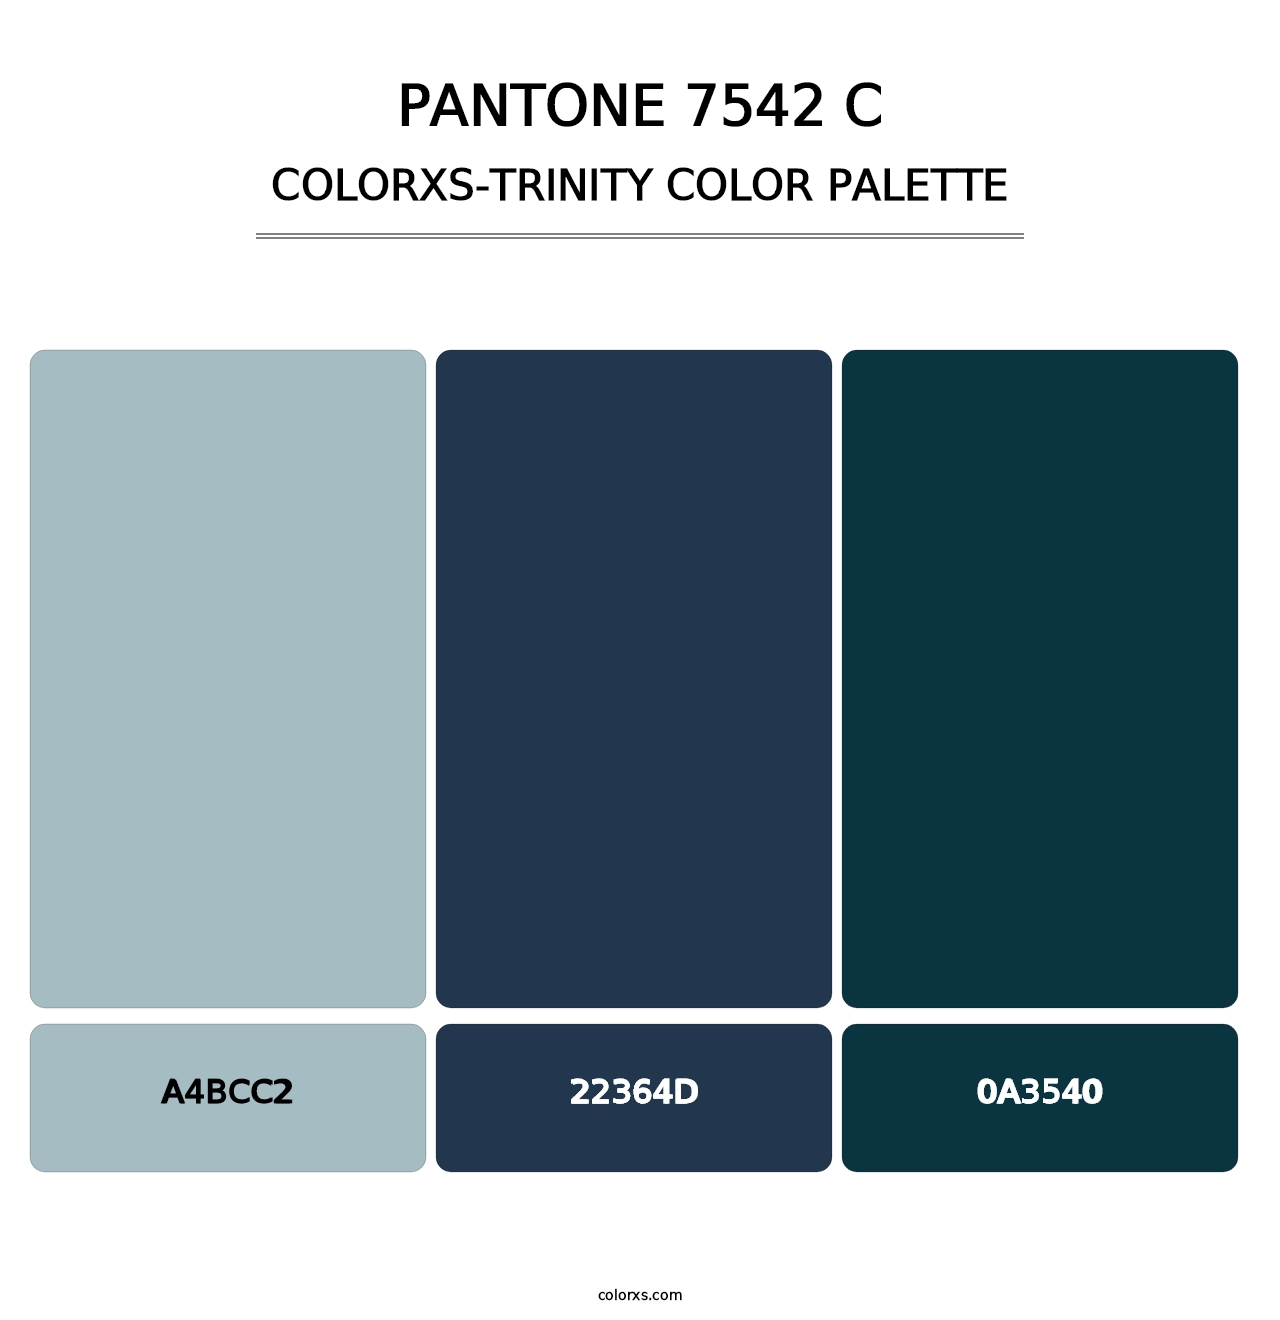 PANTONE 7542 C - Colorxs Trinity Palette